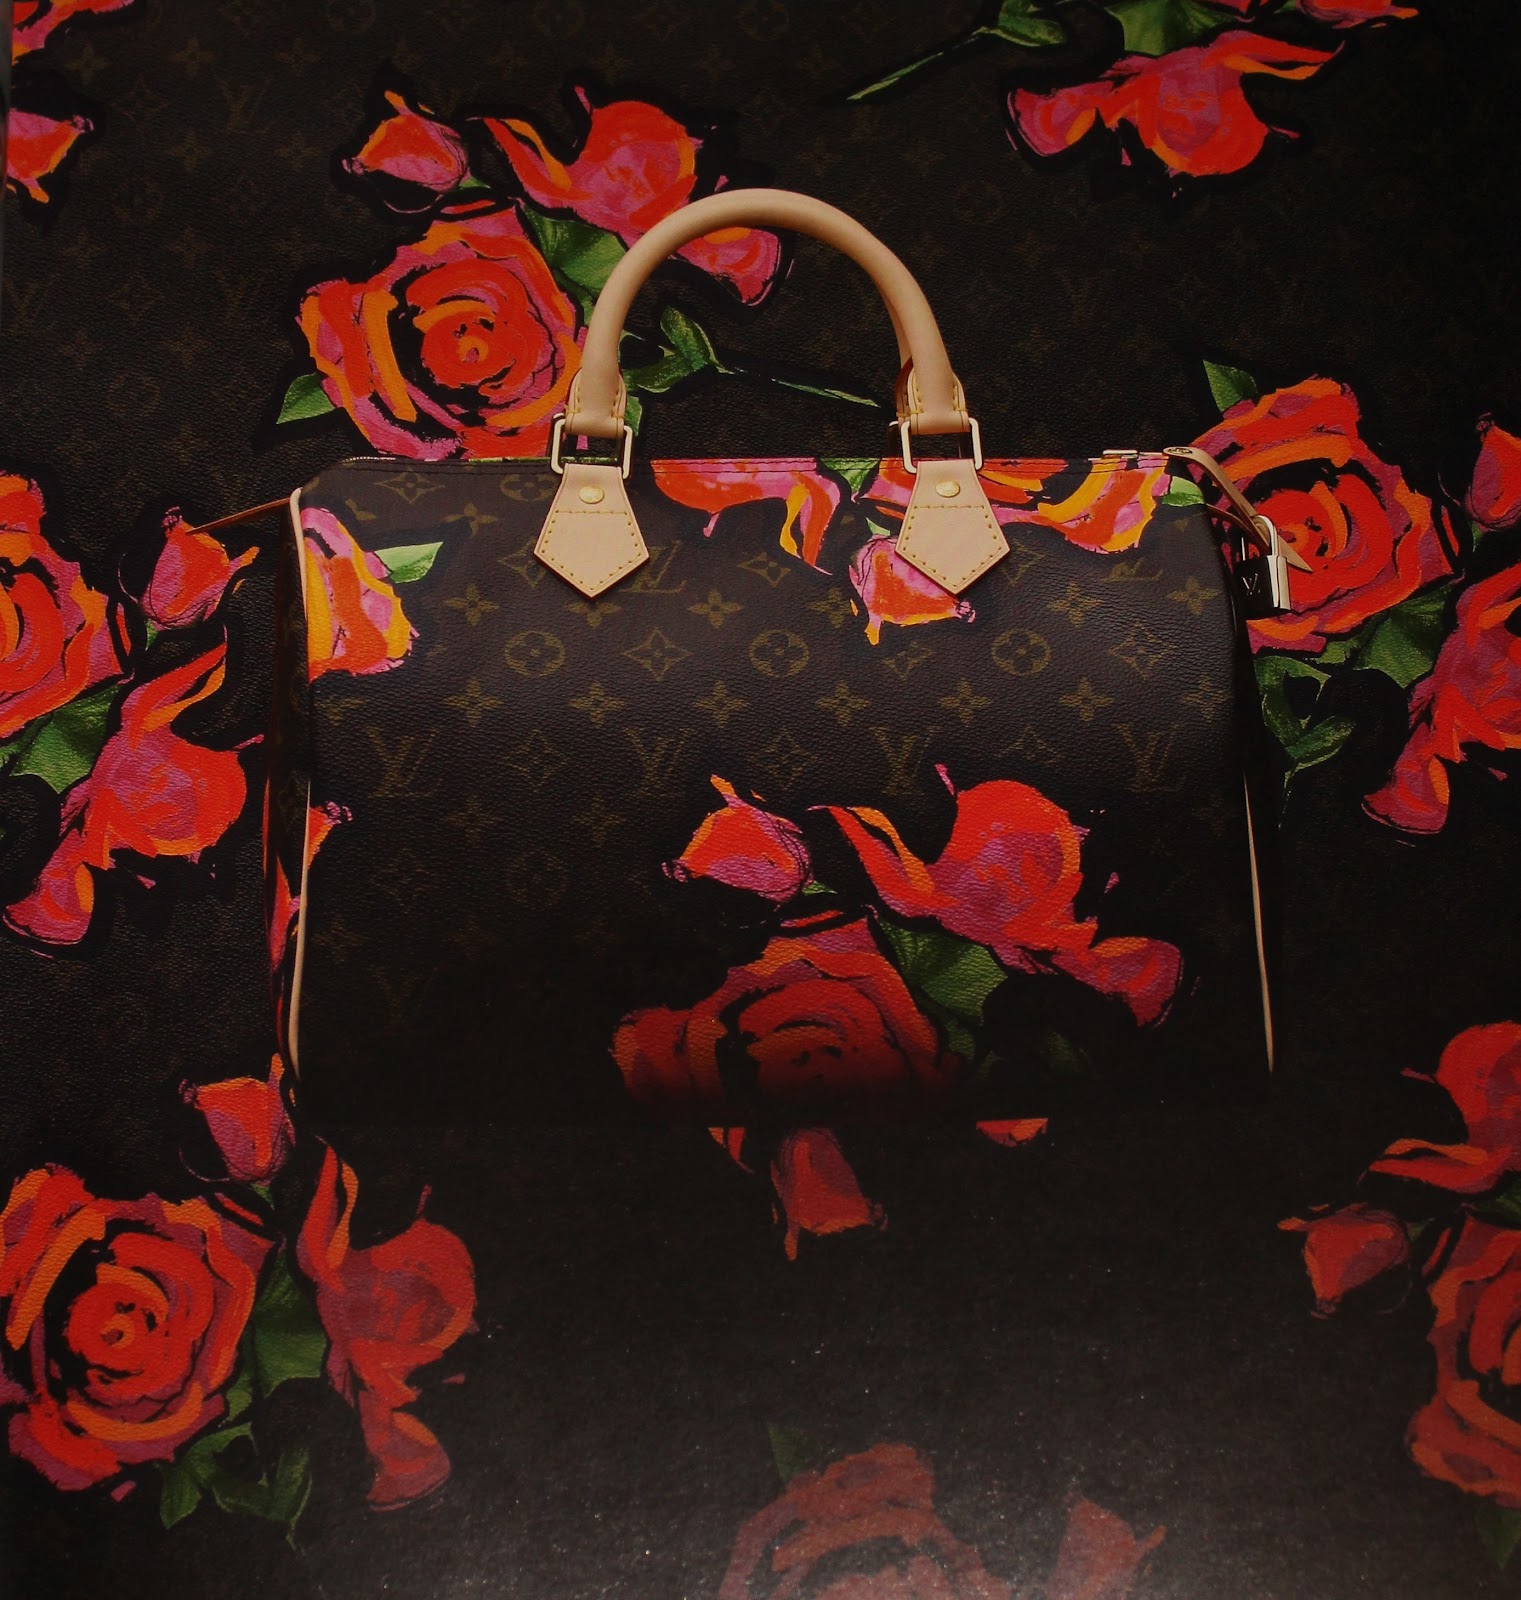 Louis Vuitton by Marc Jacobs Speedy Bag